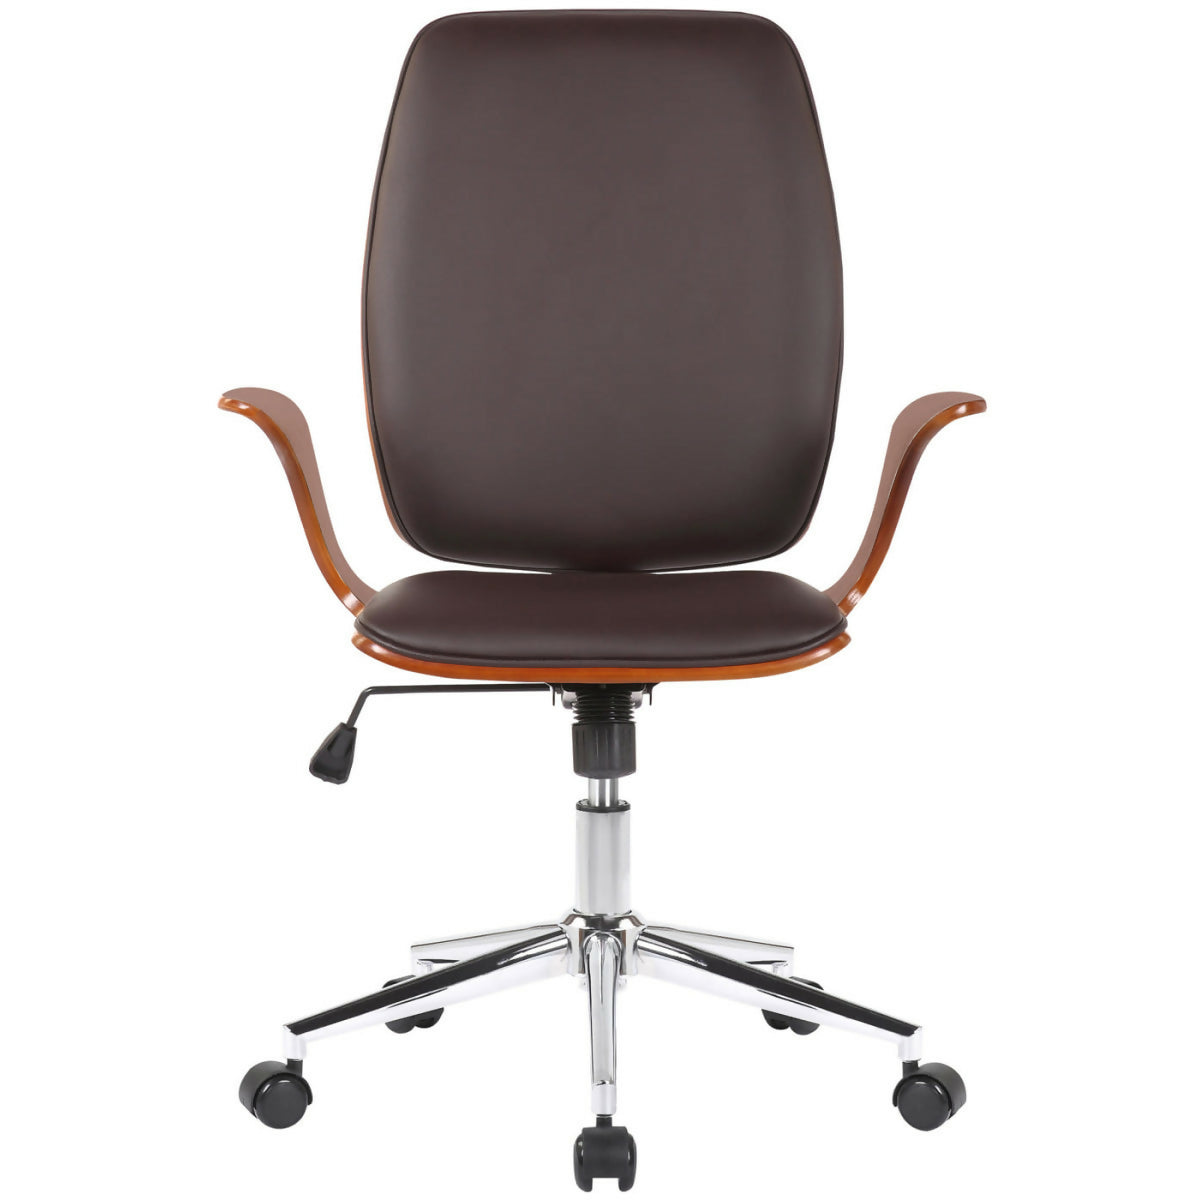 Burbank office chair - Walnut - Brown - 0